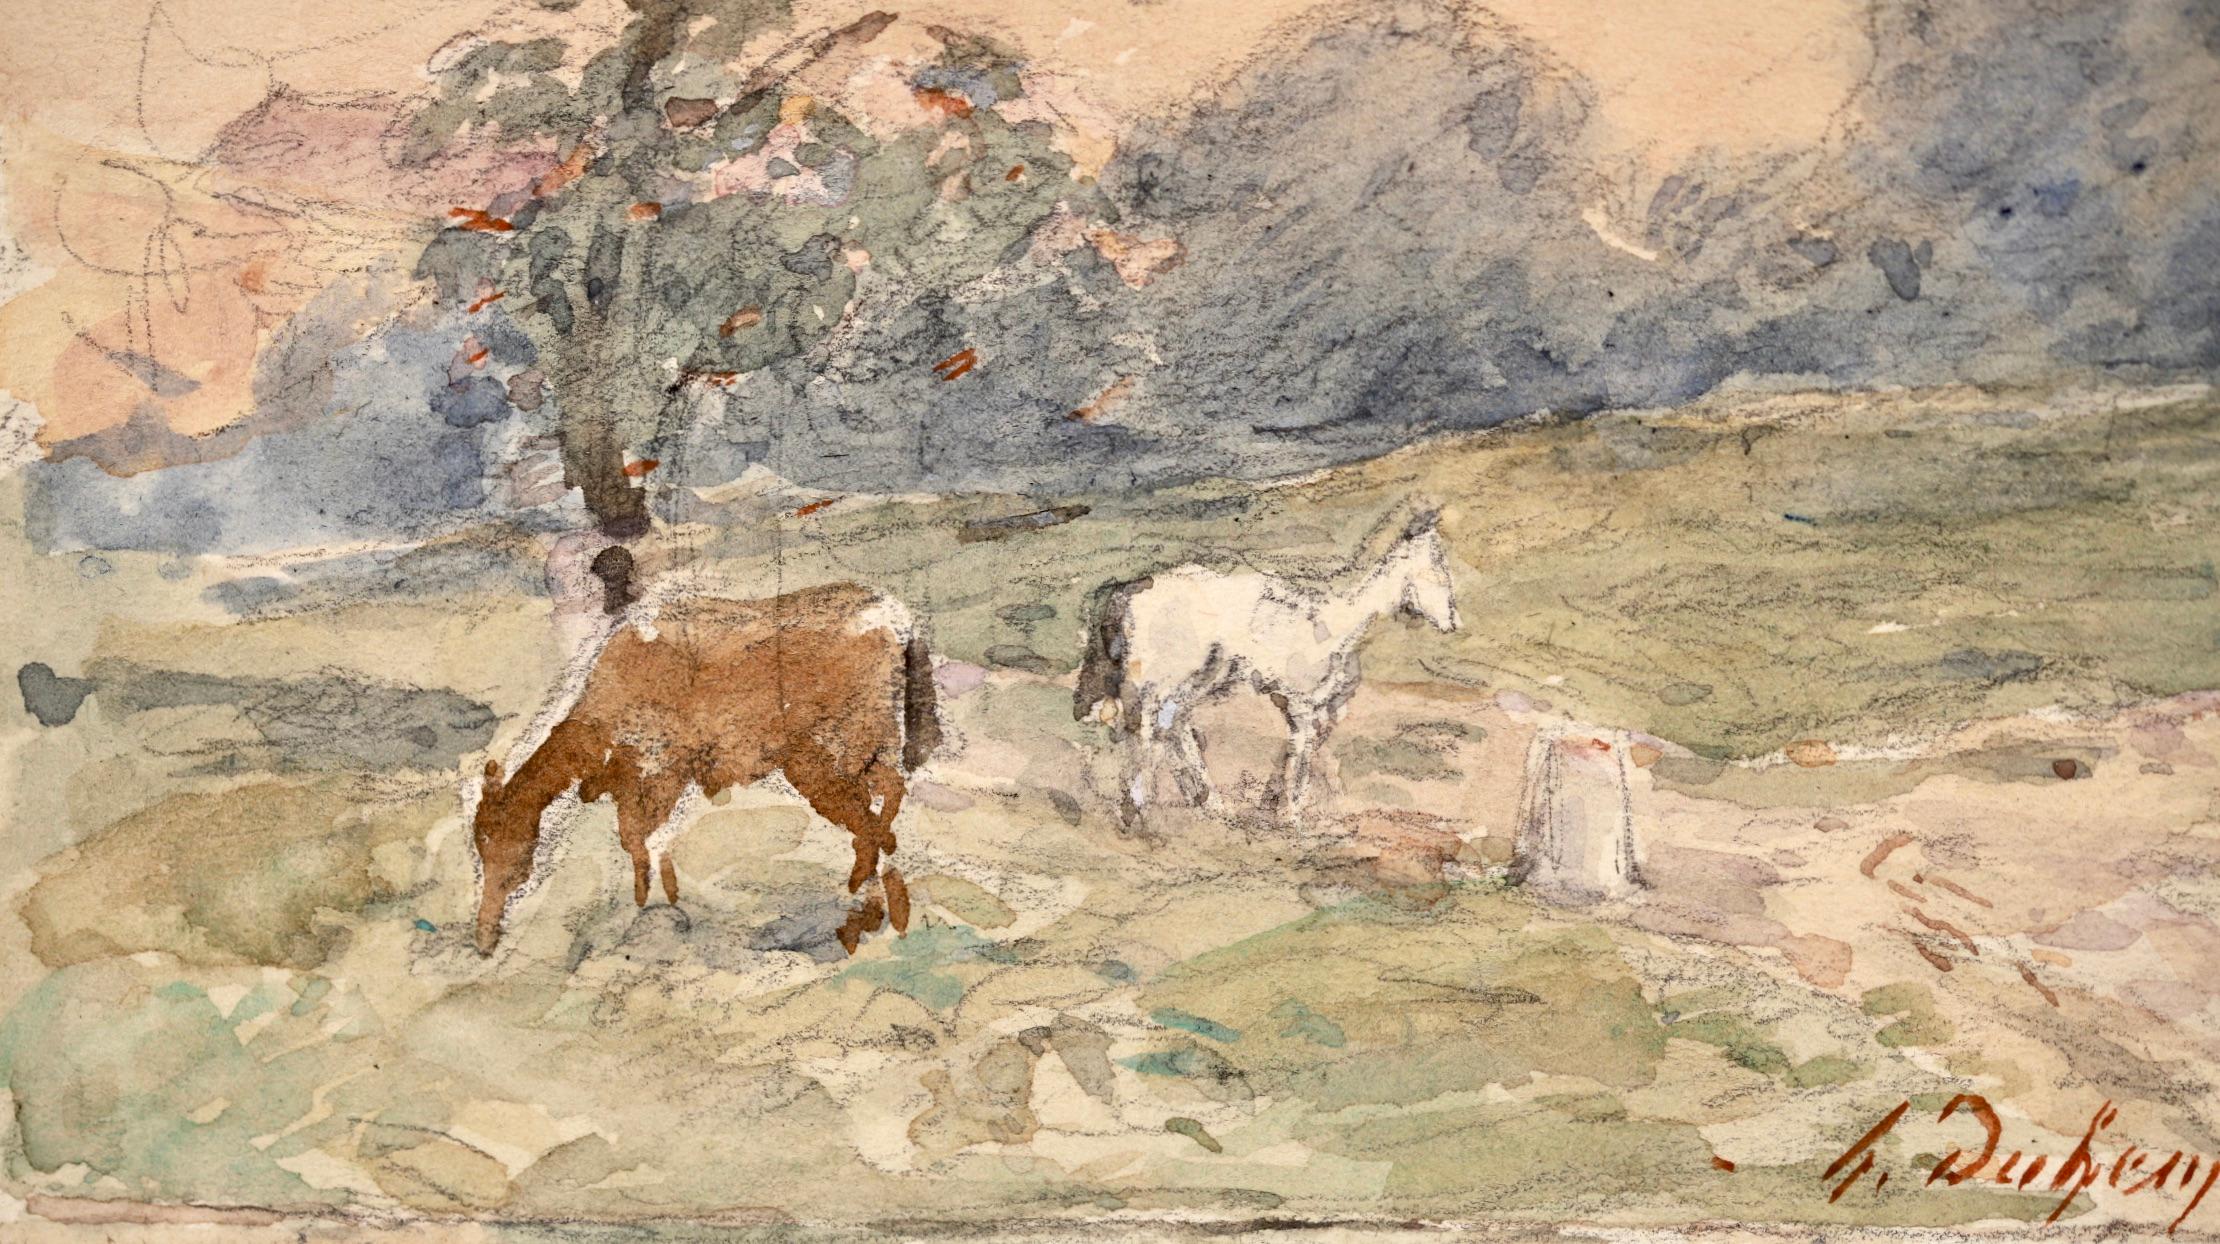 Chevaux broutant - Impressionist Watercolor, Horses in Landscape by Henri Duhem 2